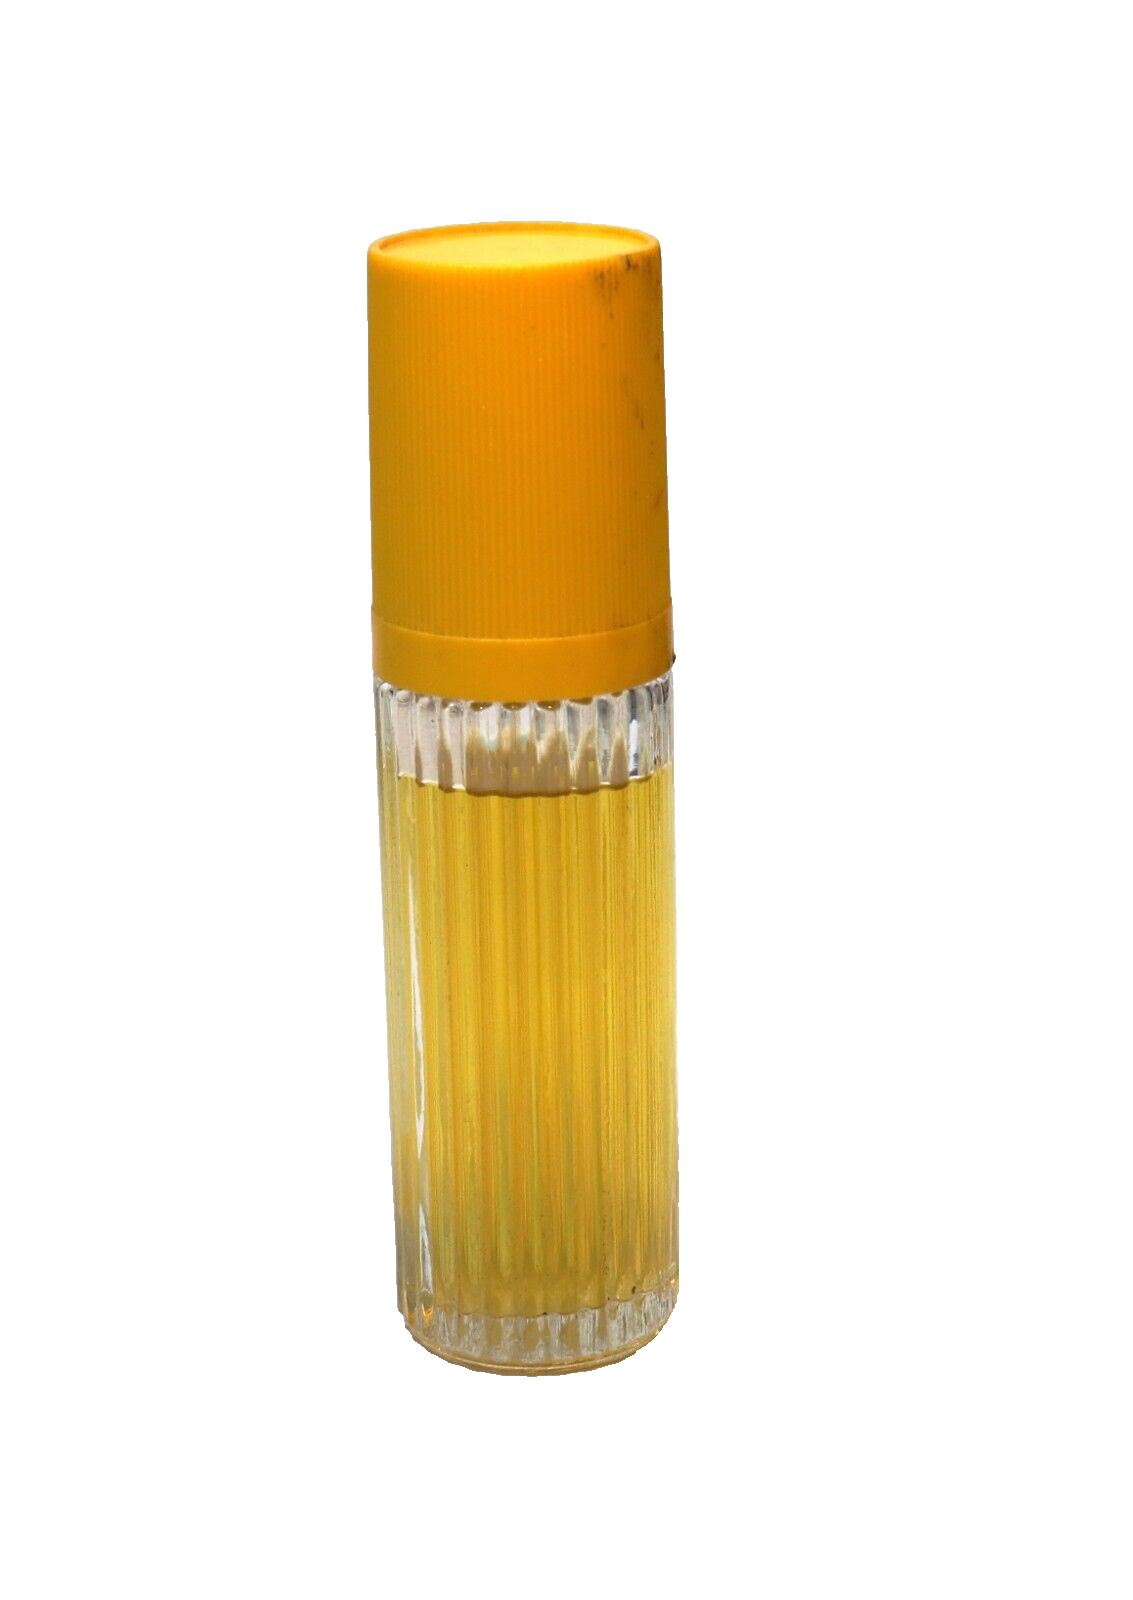 Vintage Lander Spray Cologne A 2 Oz. Yellow Plastic Cap 90% Full